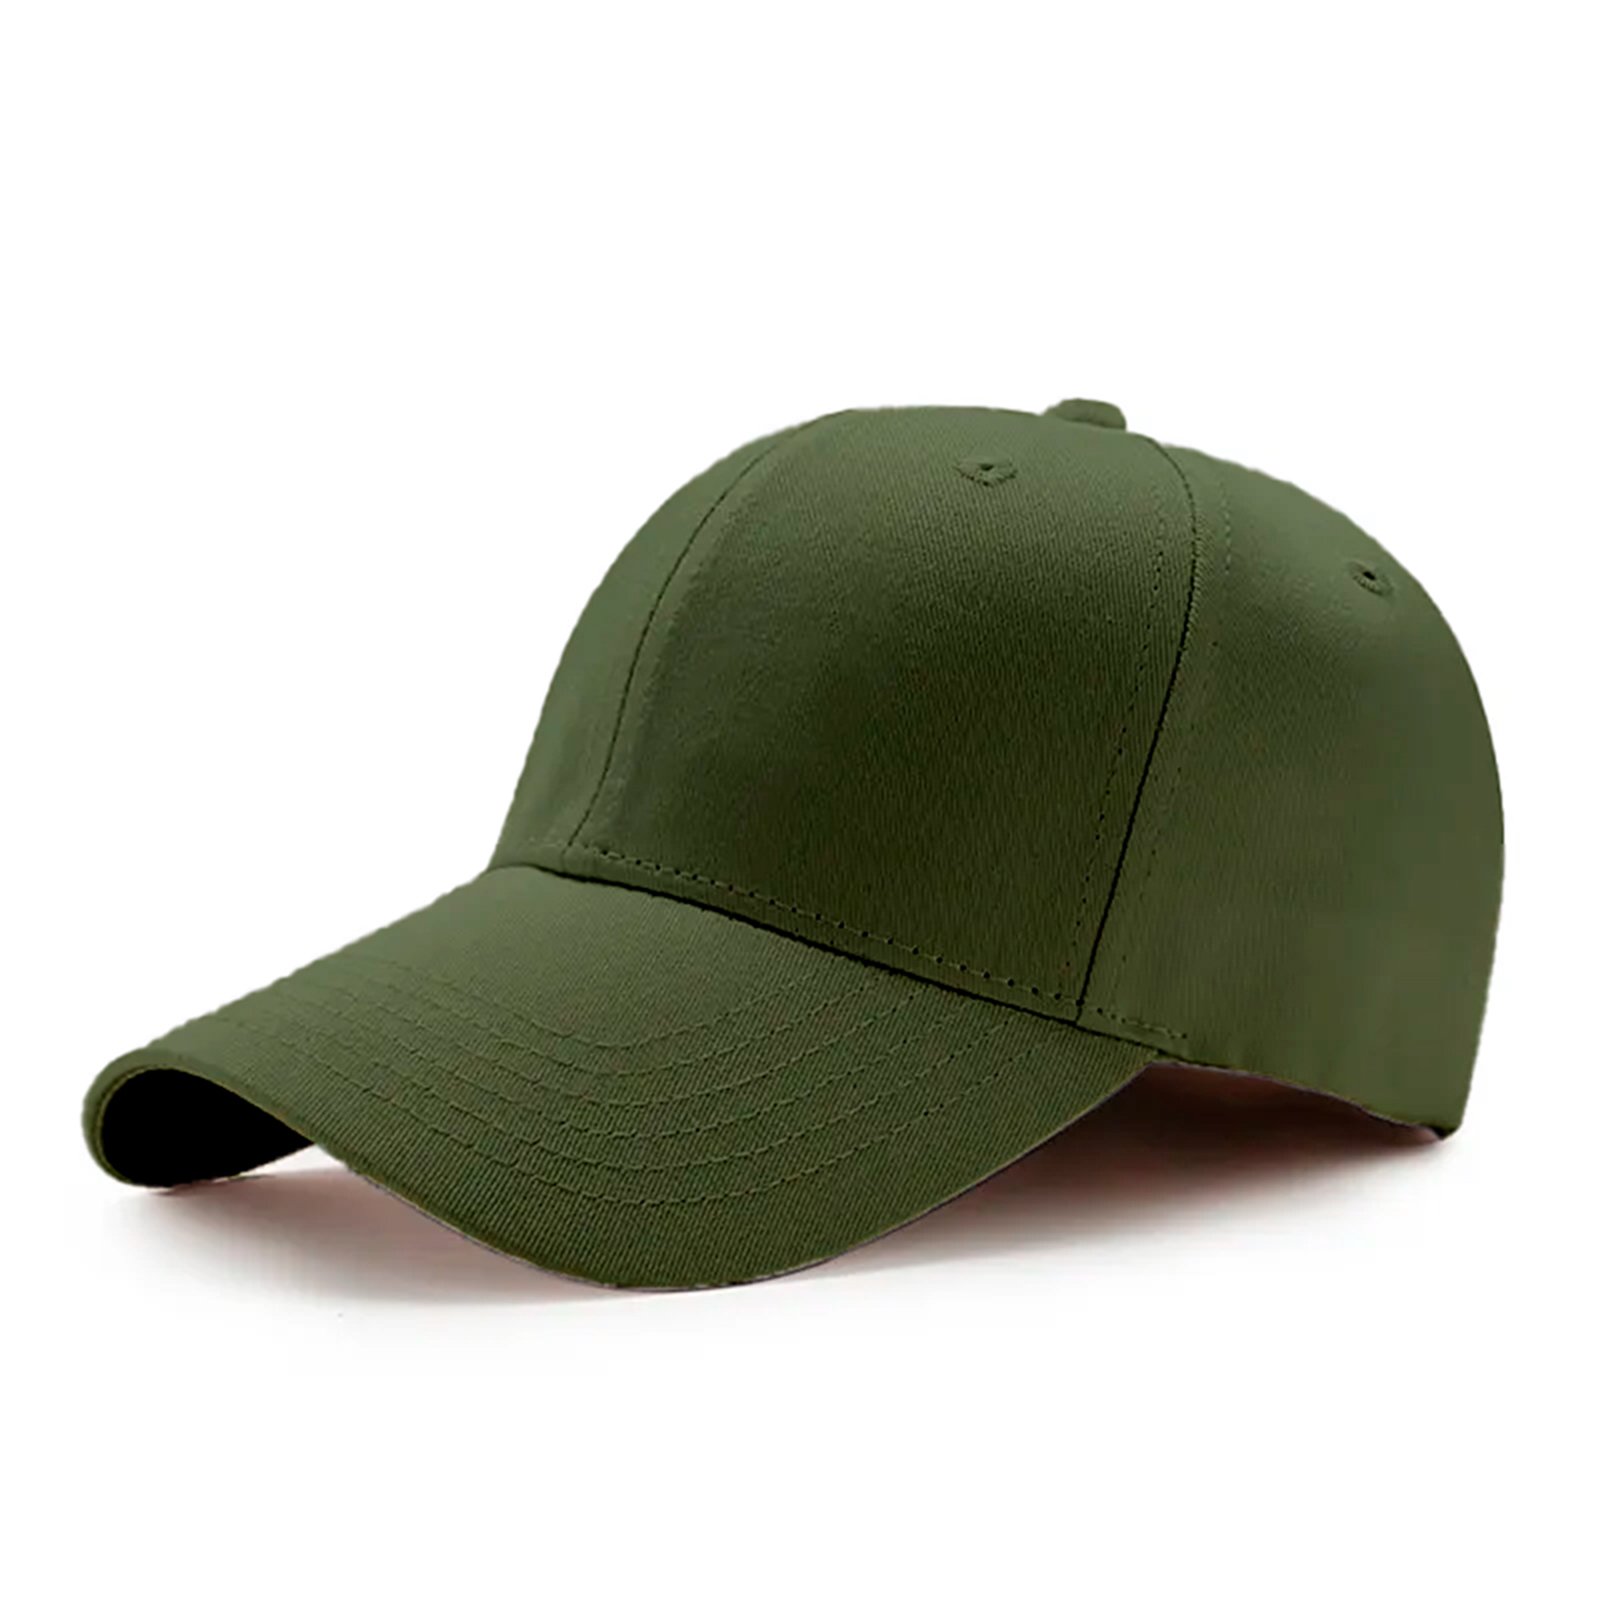 Gorra de Beisbol Verde Militar Unisex Ajustable, Entrenamiento